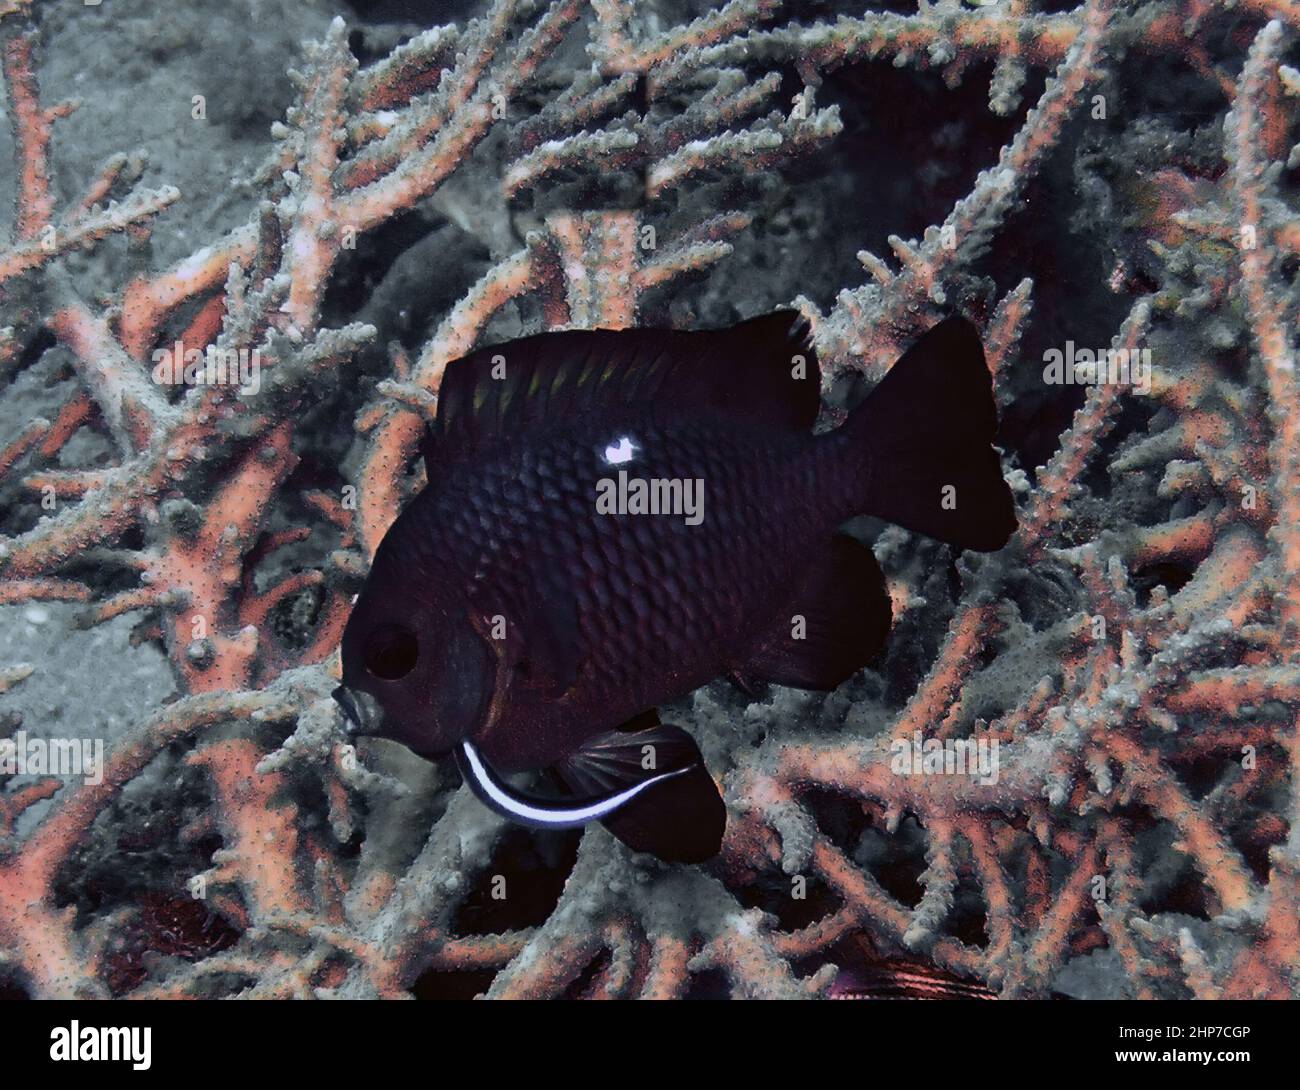 Three Spot Domino Damselfish (Dascyllus trimaculatus) in the Red Sea, Egypt Stock Photo